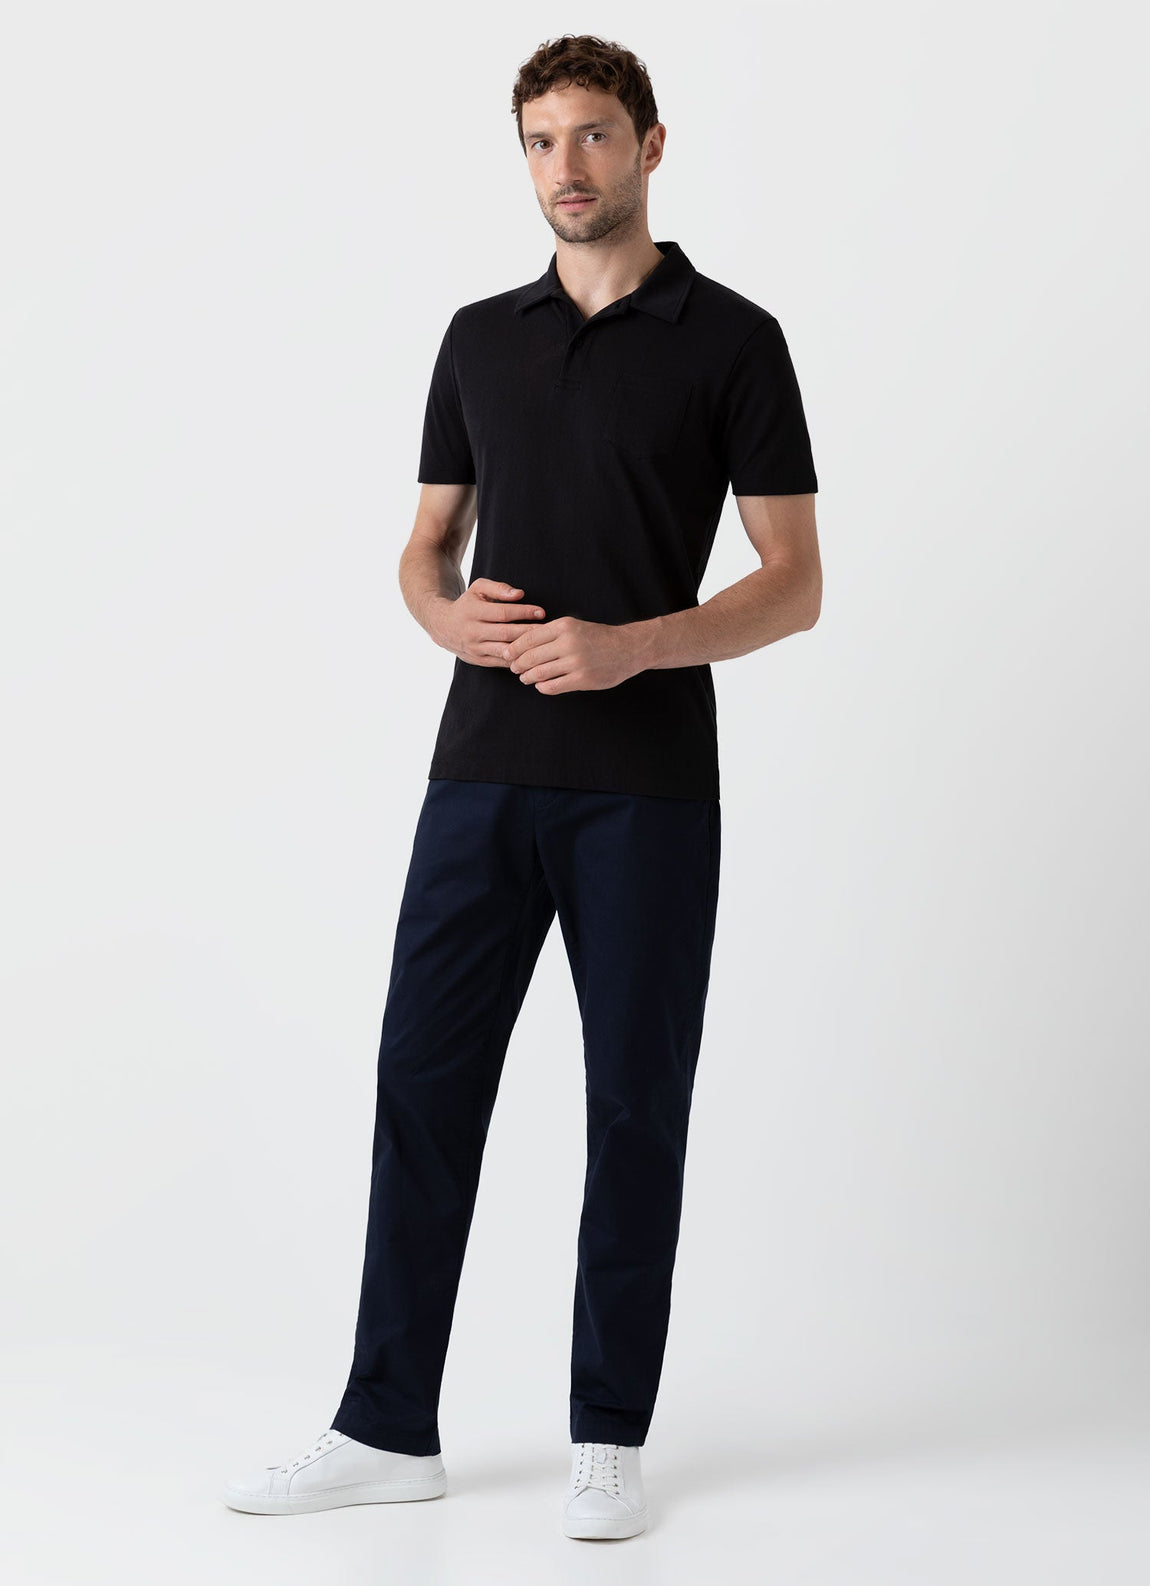 Men's Riviera Polo Shirt in Black | Sunspel